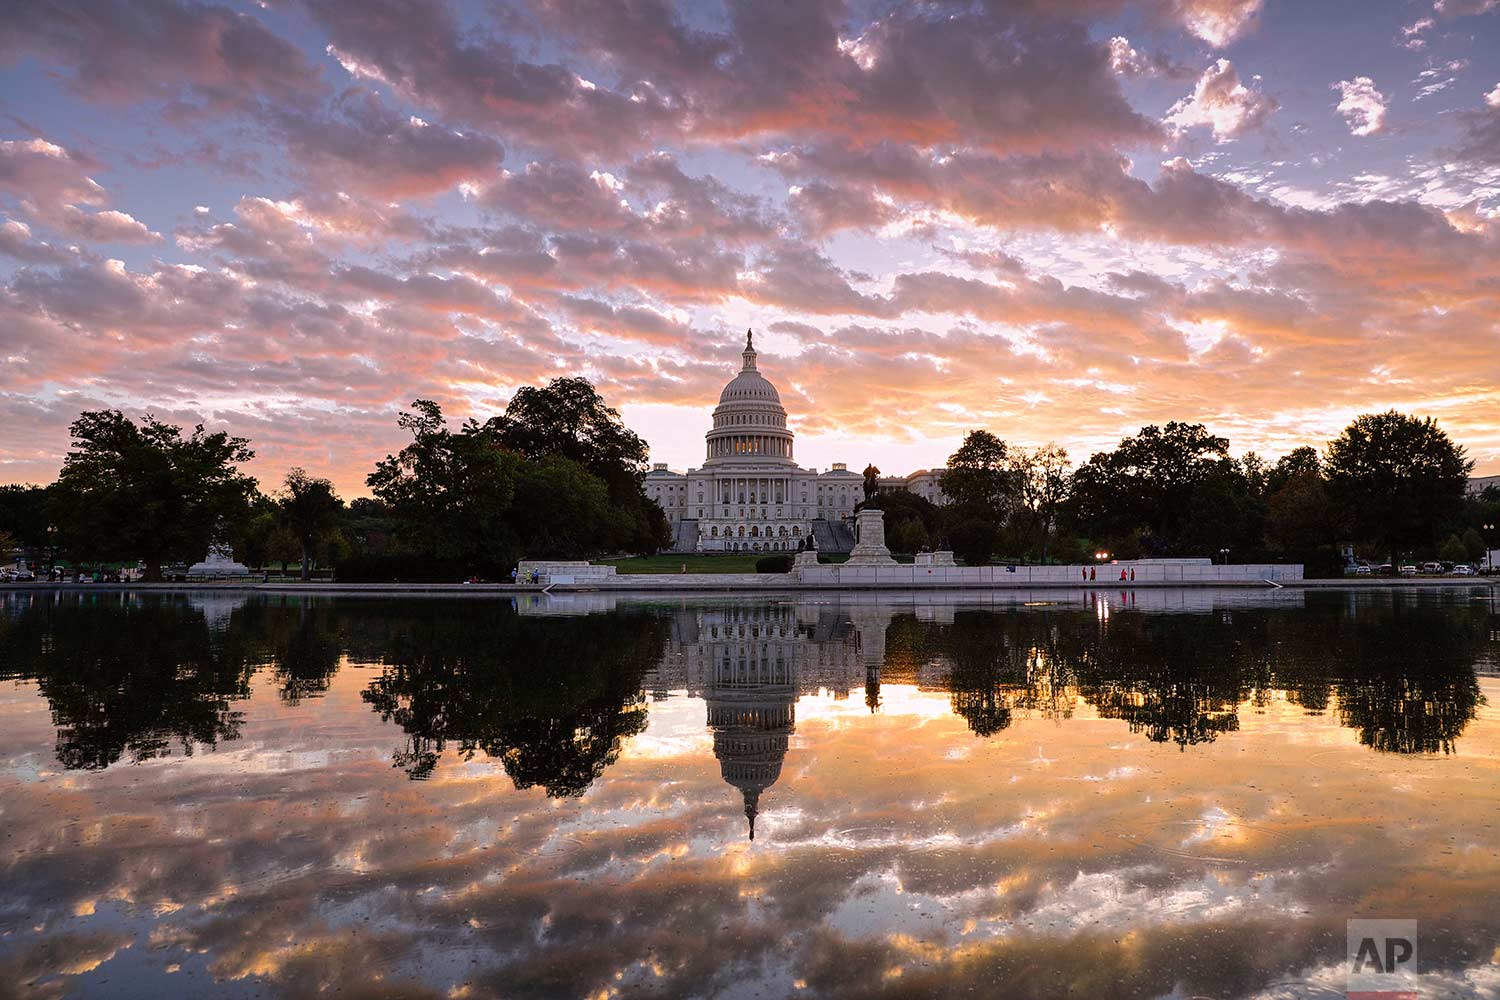  The sun rises above the U.S. Capitol building in Washington on Tuesday, Oct. 10, 2017. (AP Photo/J. Scott Applewhite) 